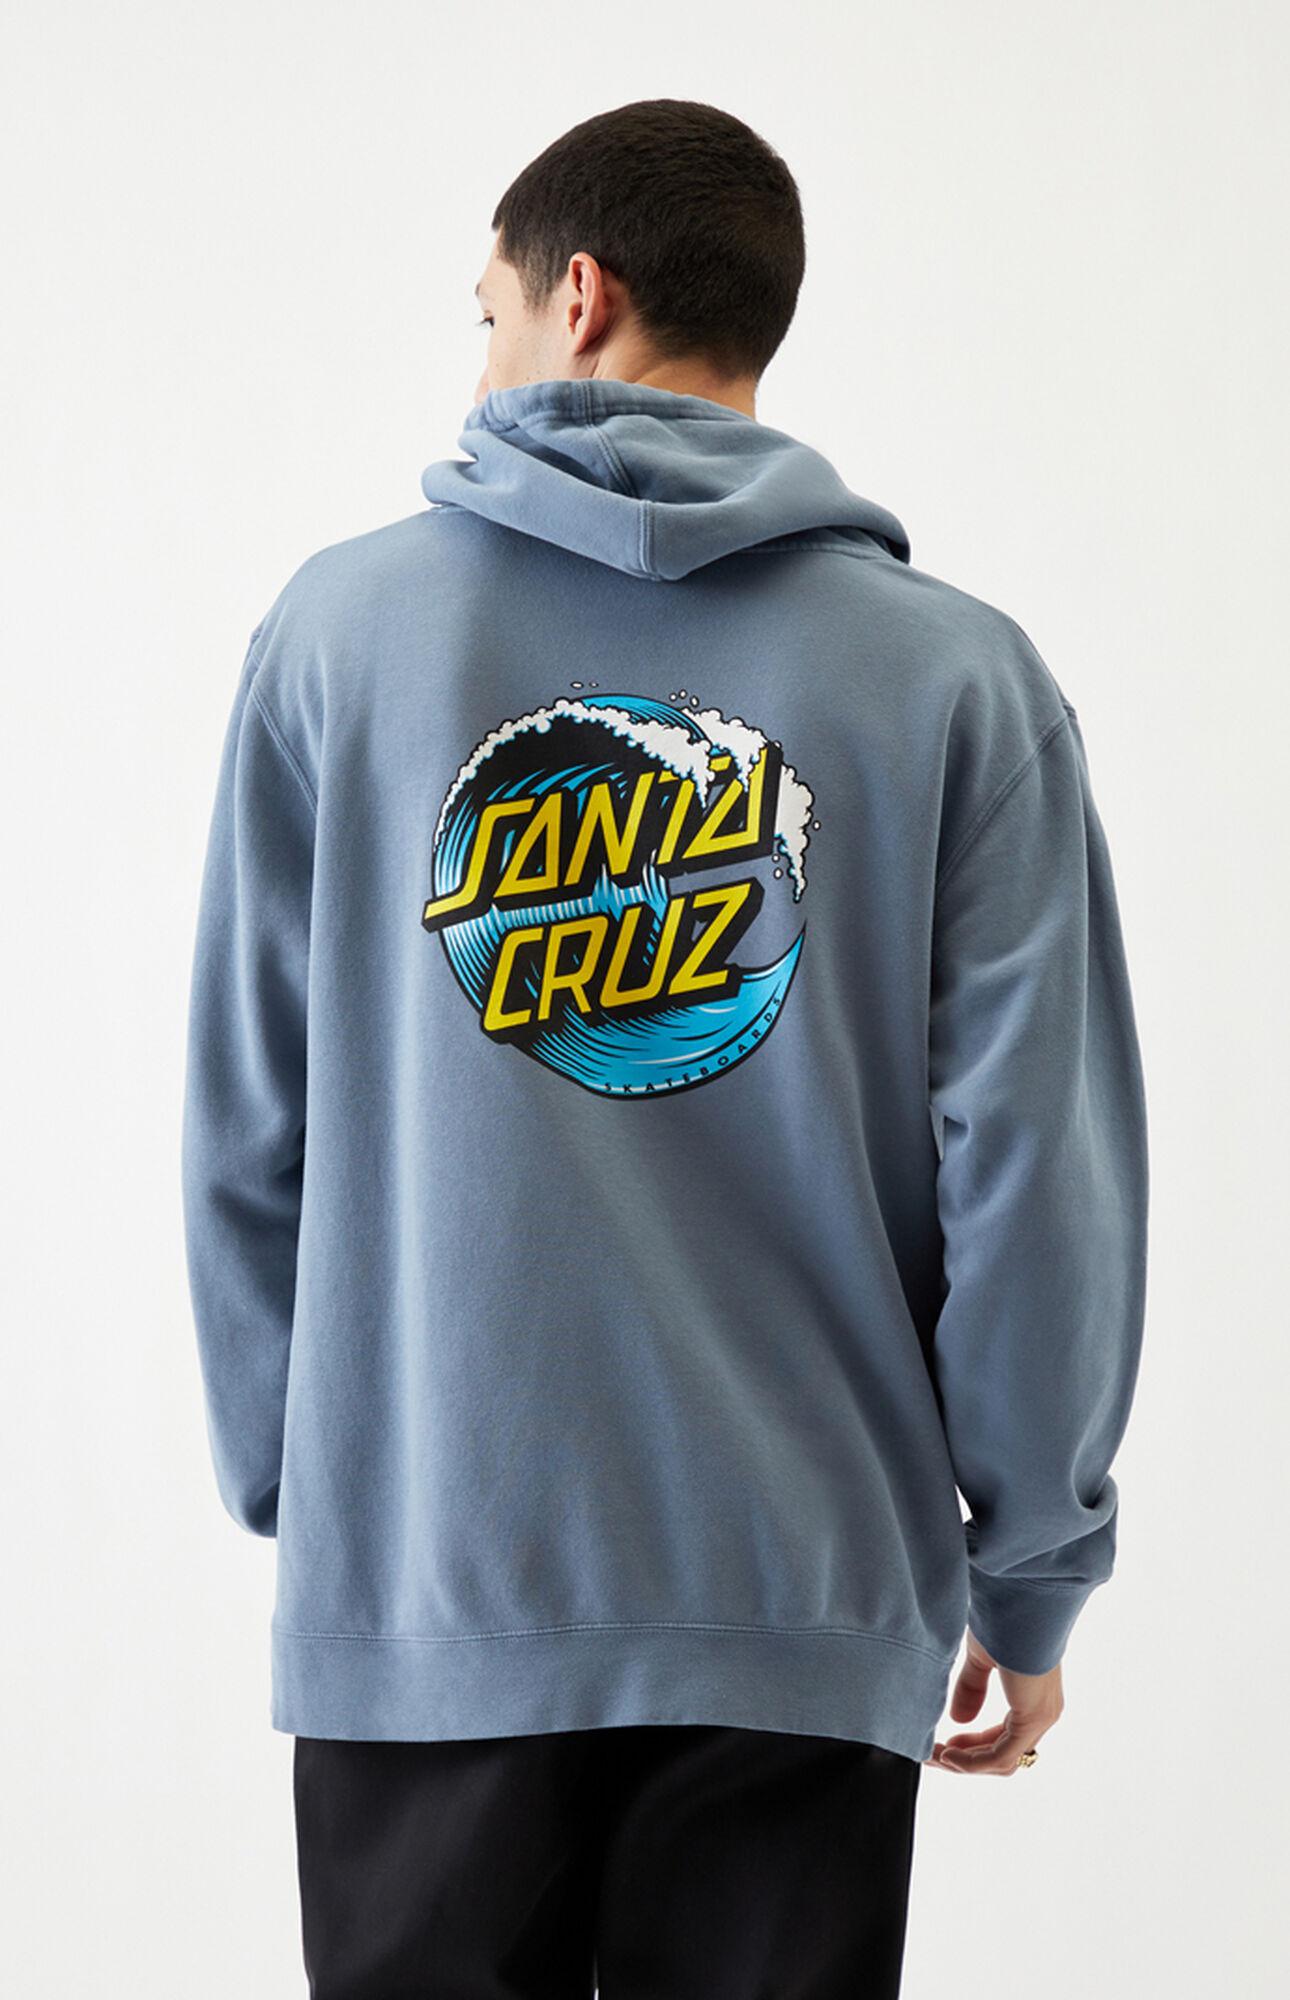 Santa Cruz Fleece Wave Dot Hoodie in Blue for Men - Lyst